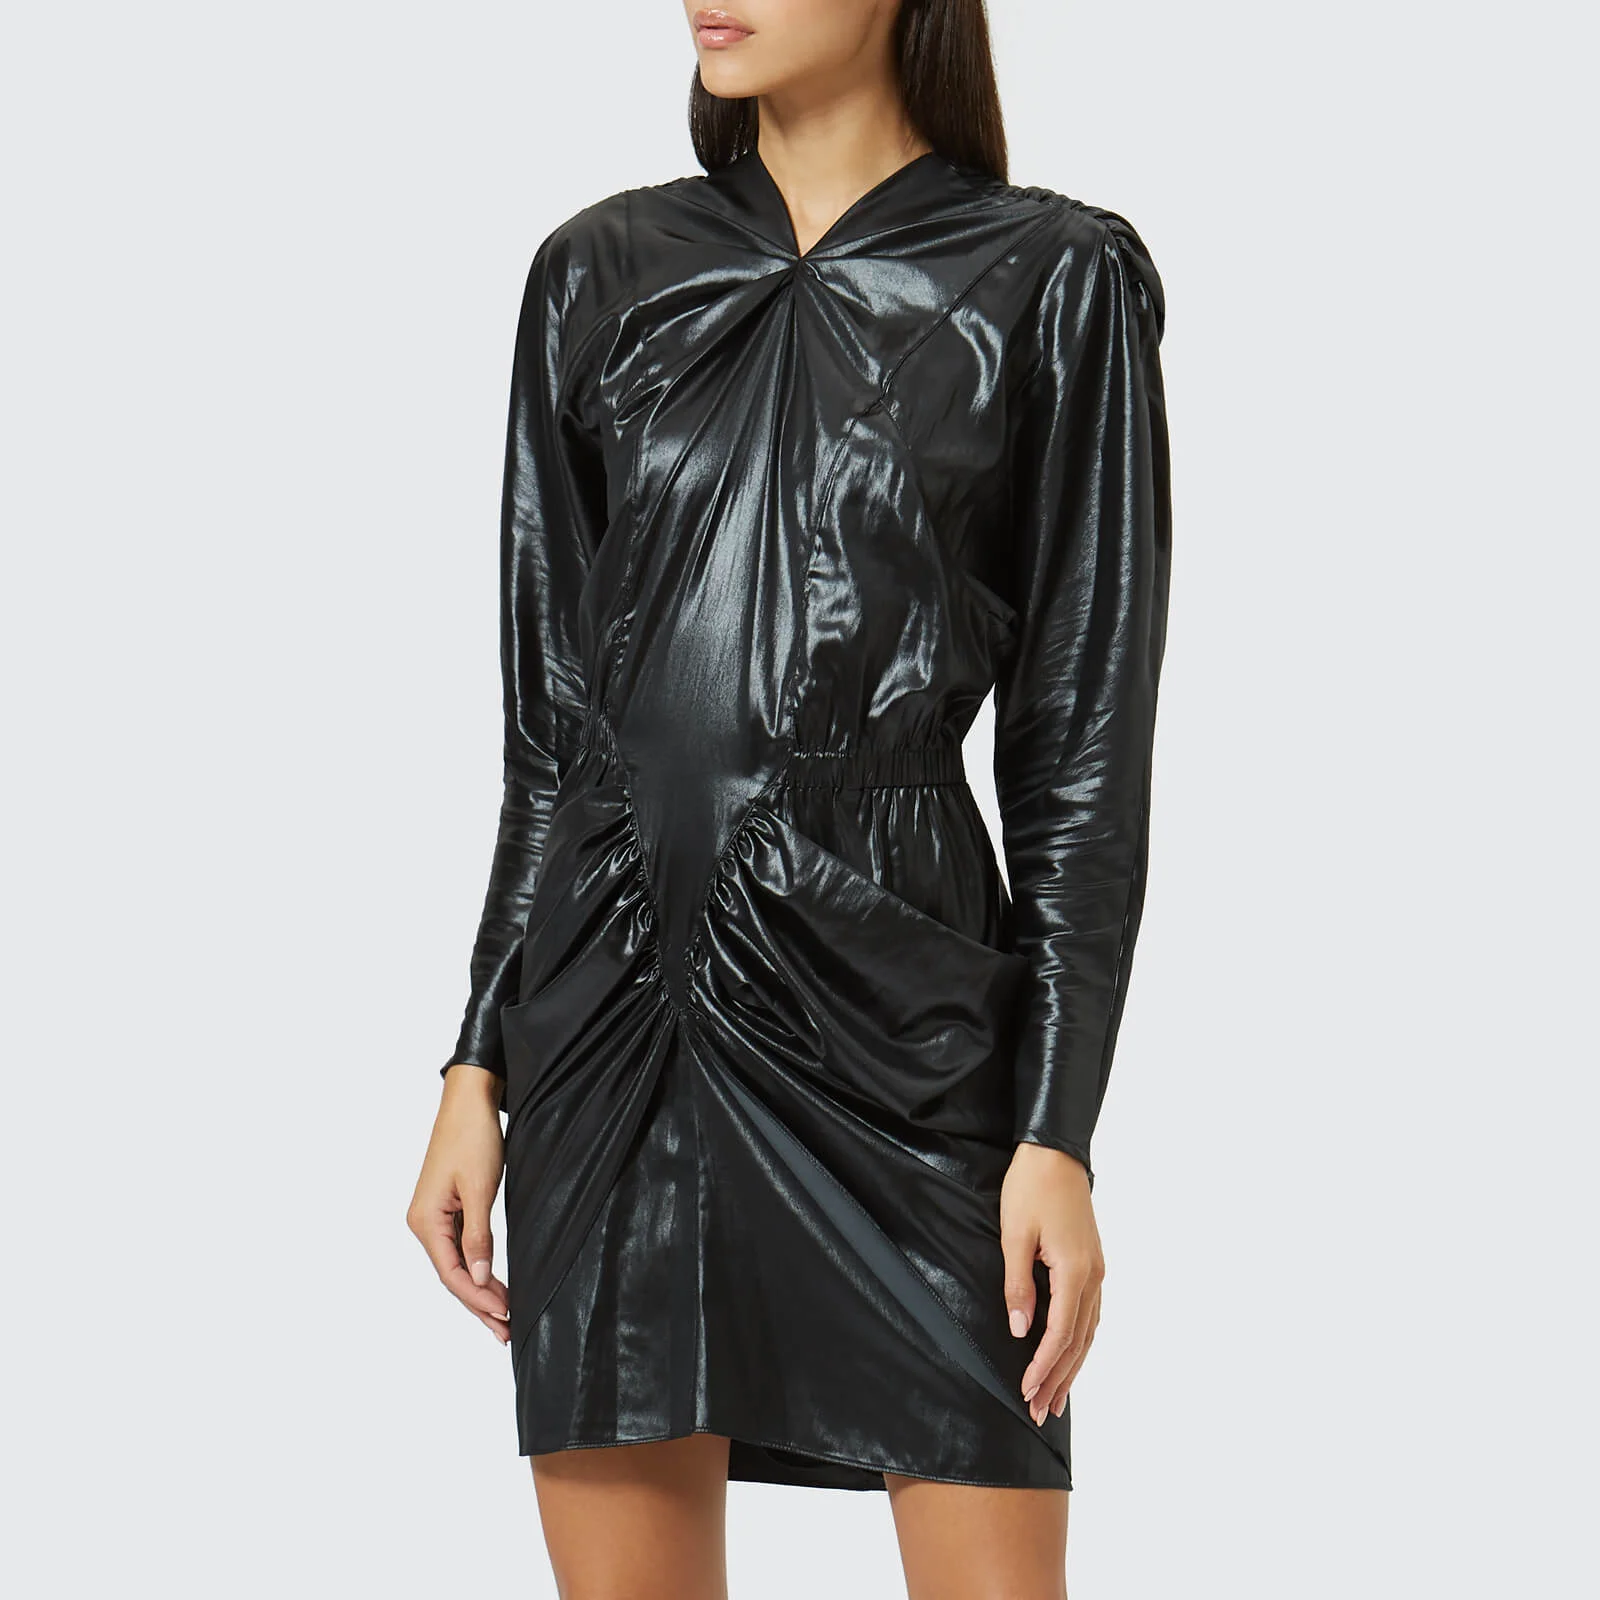 Marant Etoile Women's Soya Shiny Techno Dress - Black Image 1